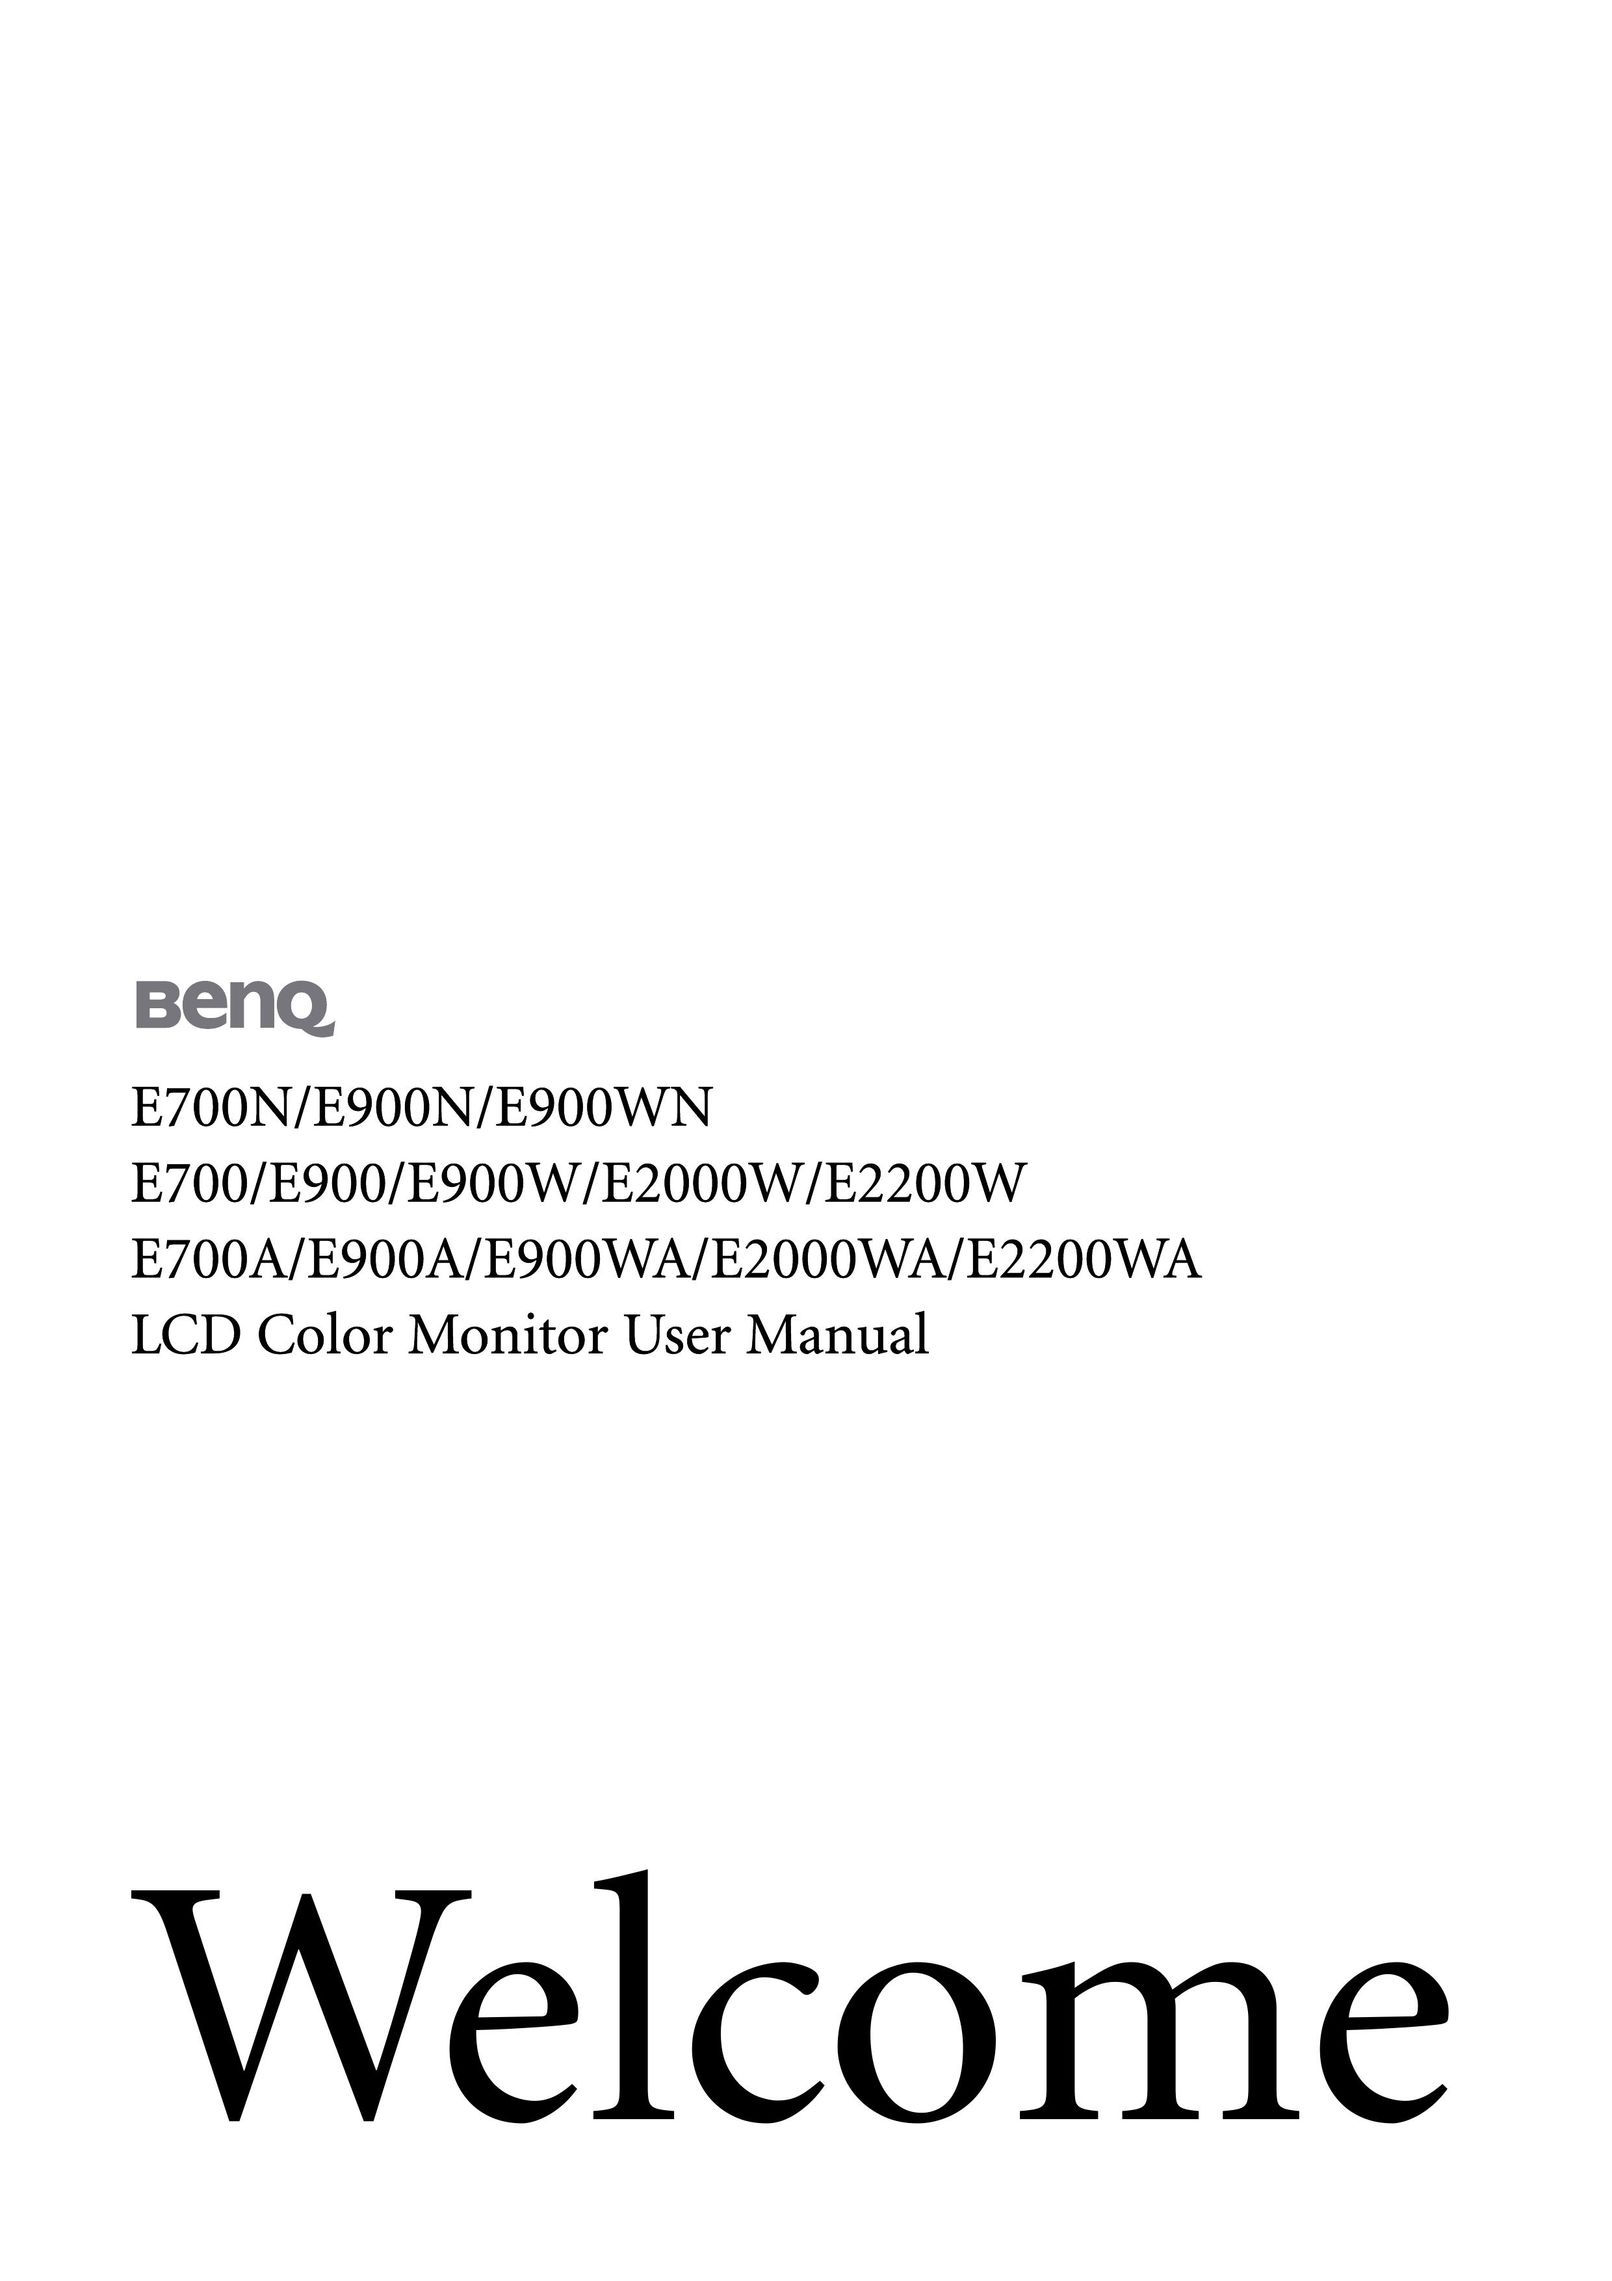 BenQ E900WA Computer Monitor User Manual (Page 1)